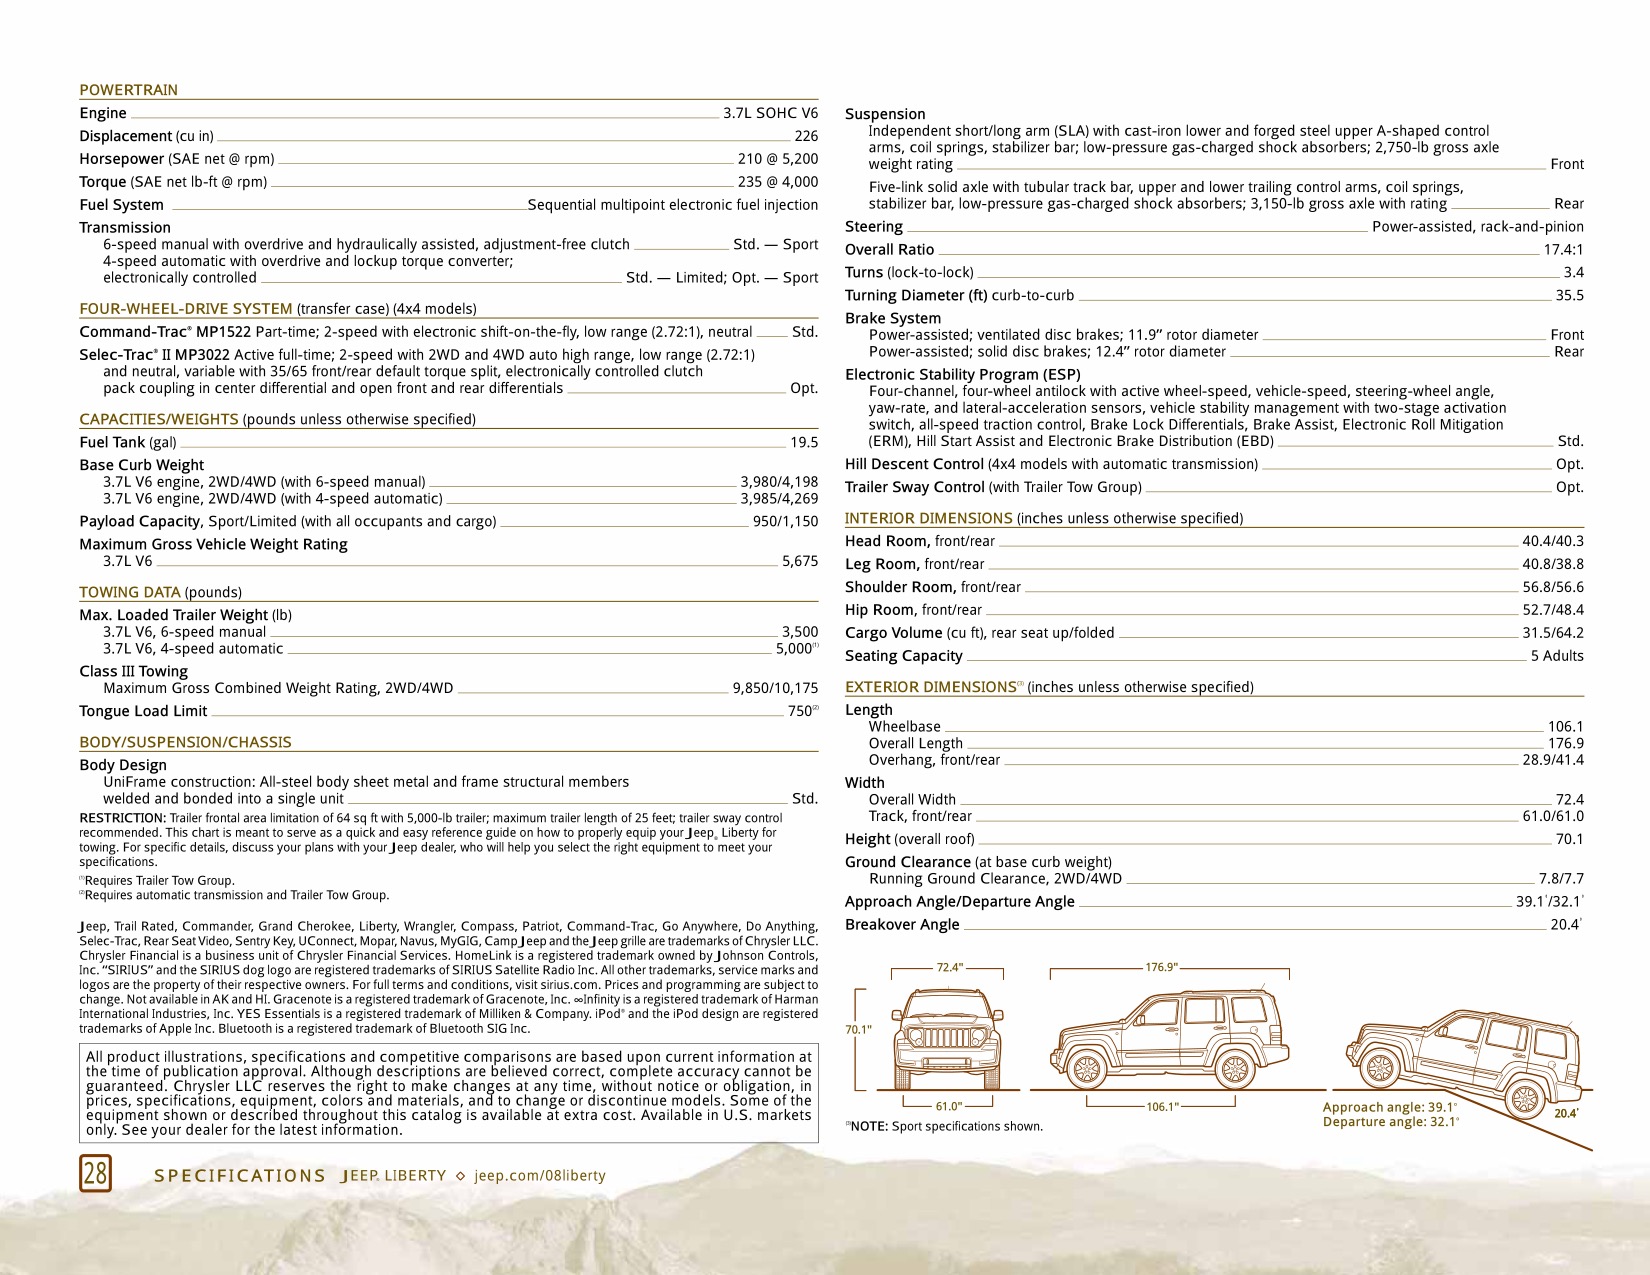 2008 Jeep Liberty Brochure Page 22